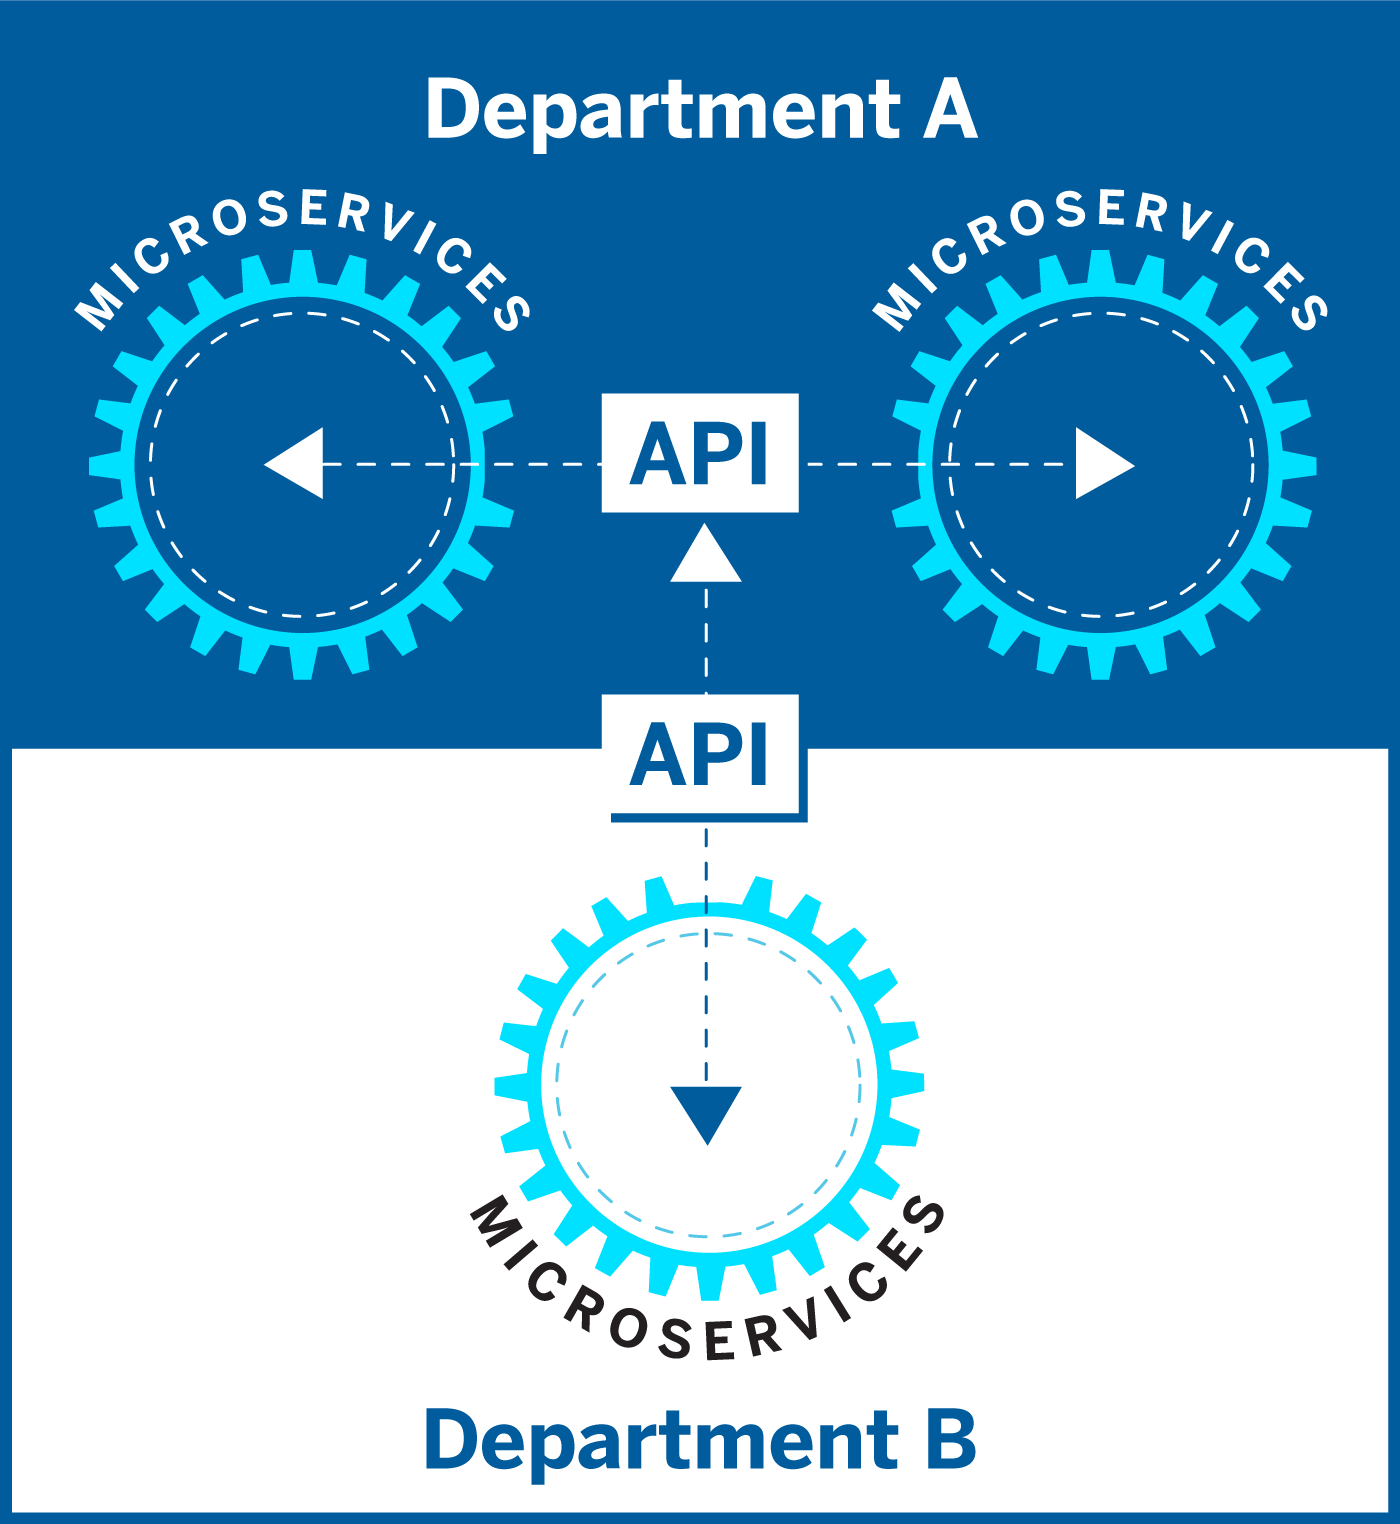 API-Based Microservices Ease Coordination Across the Enterprise